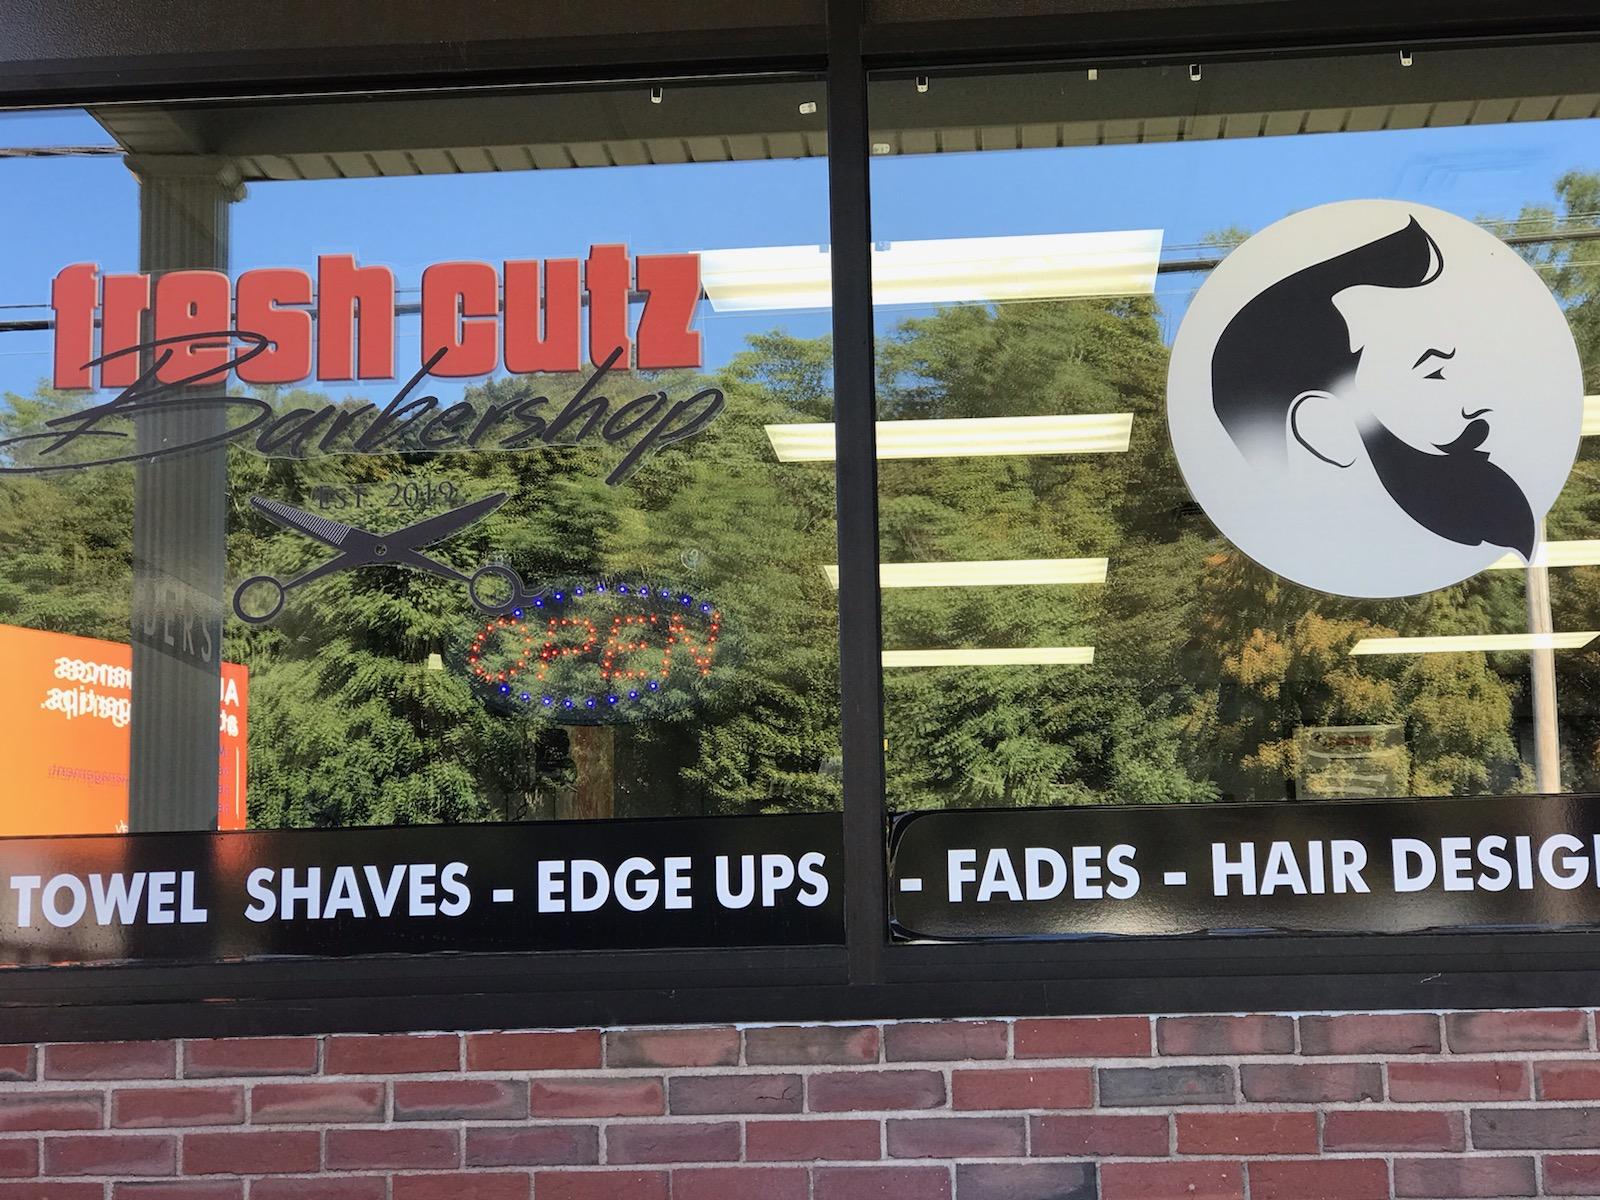 Fresh Cutz Barbershop